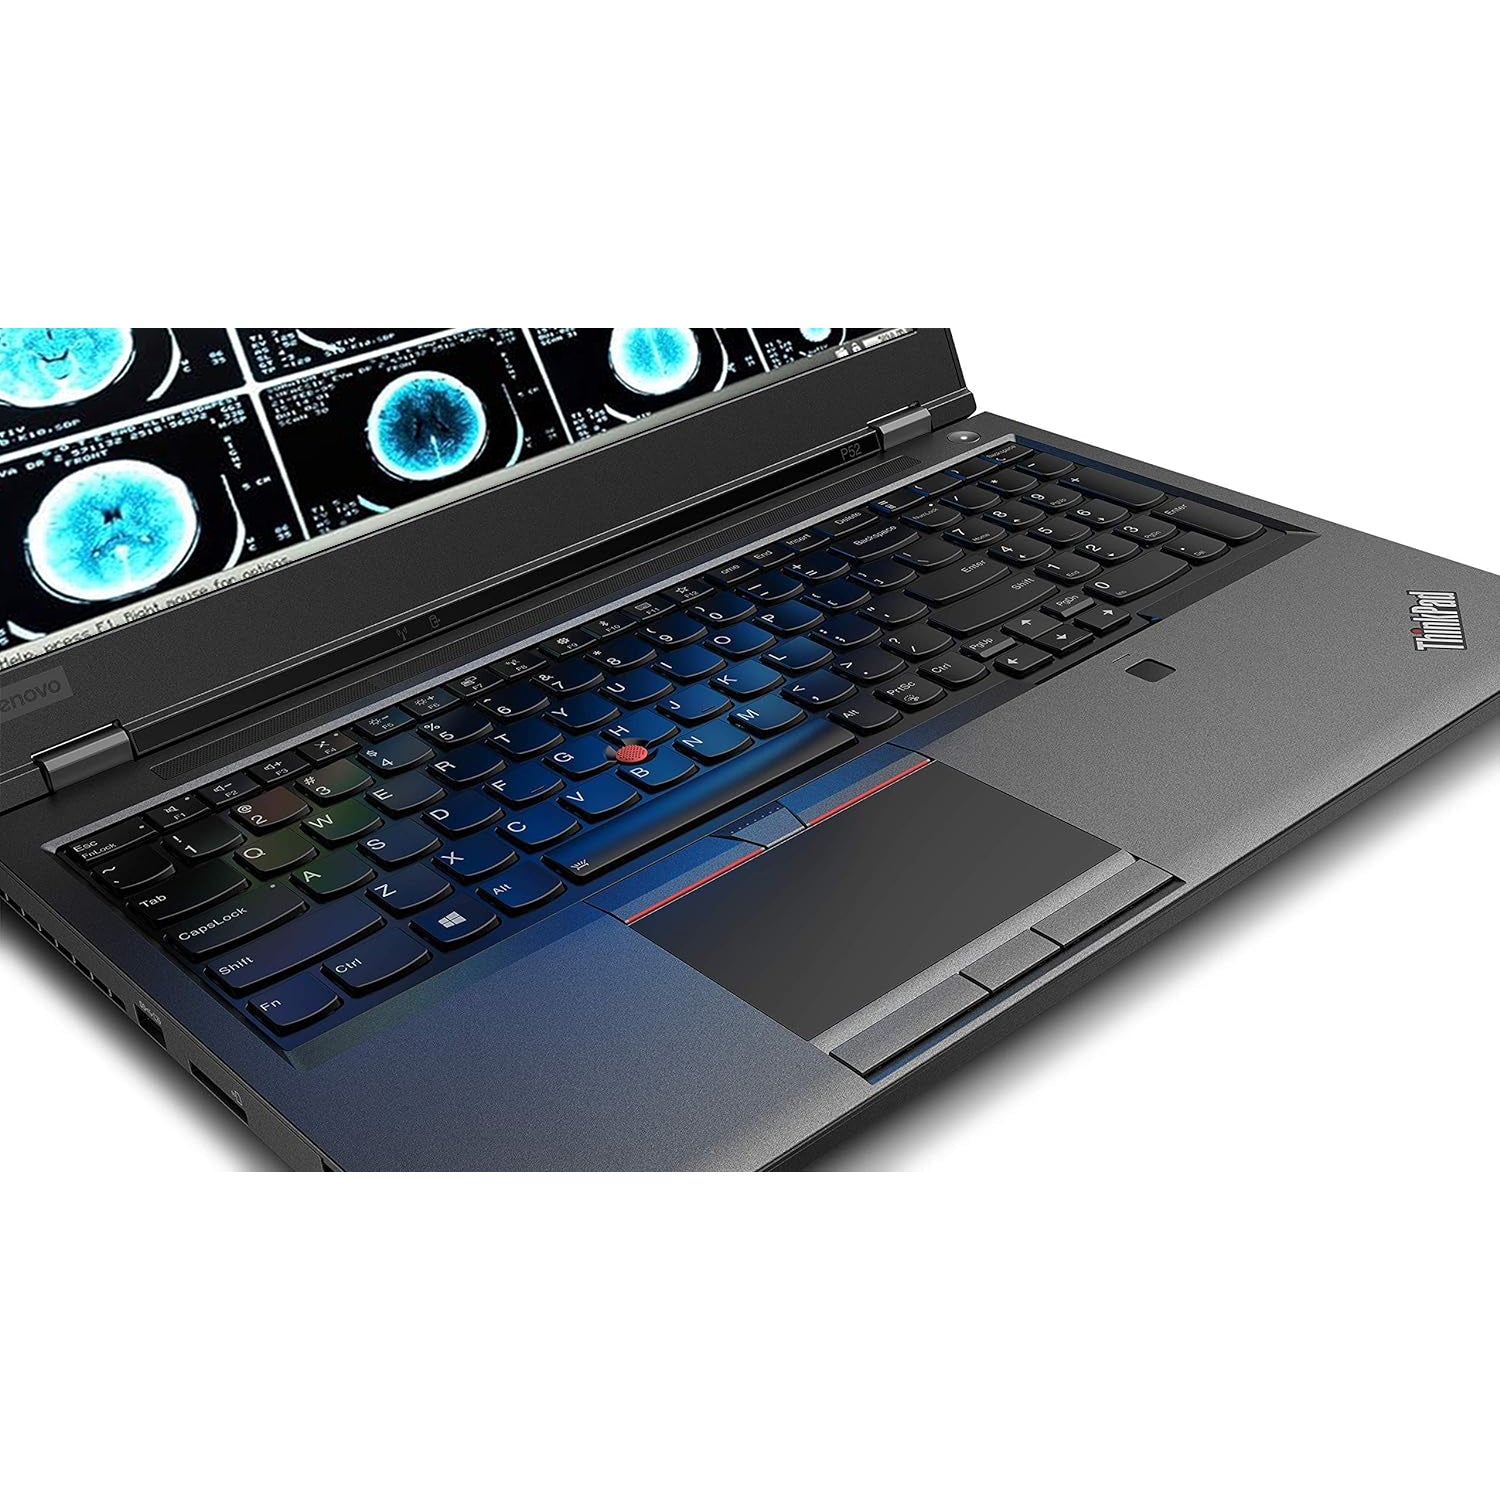 Lenovo ThinkPad P52 Workstation Core i7-8750h Nvidia Quadro P1000 4gb 15.6